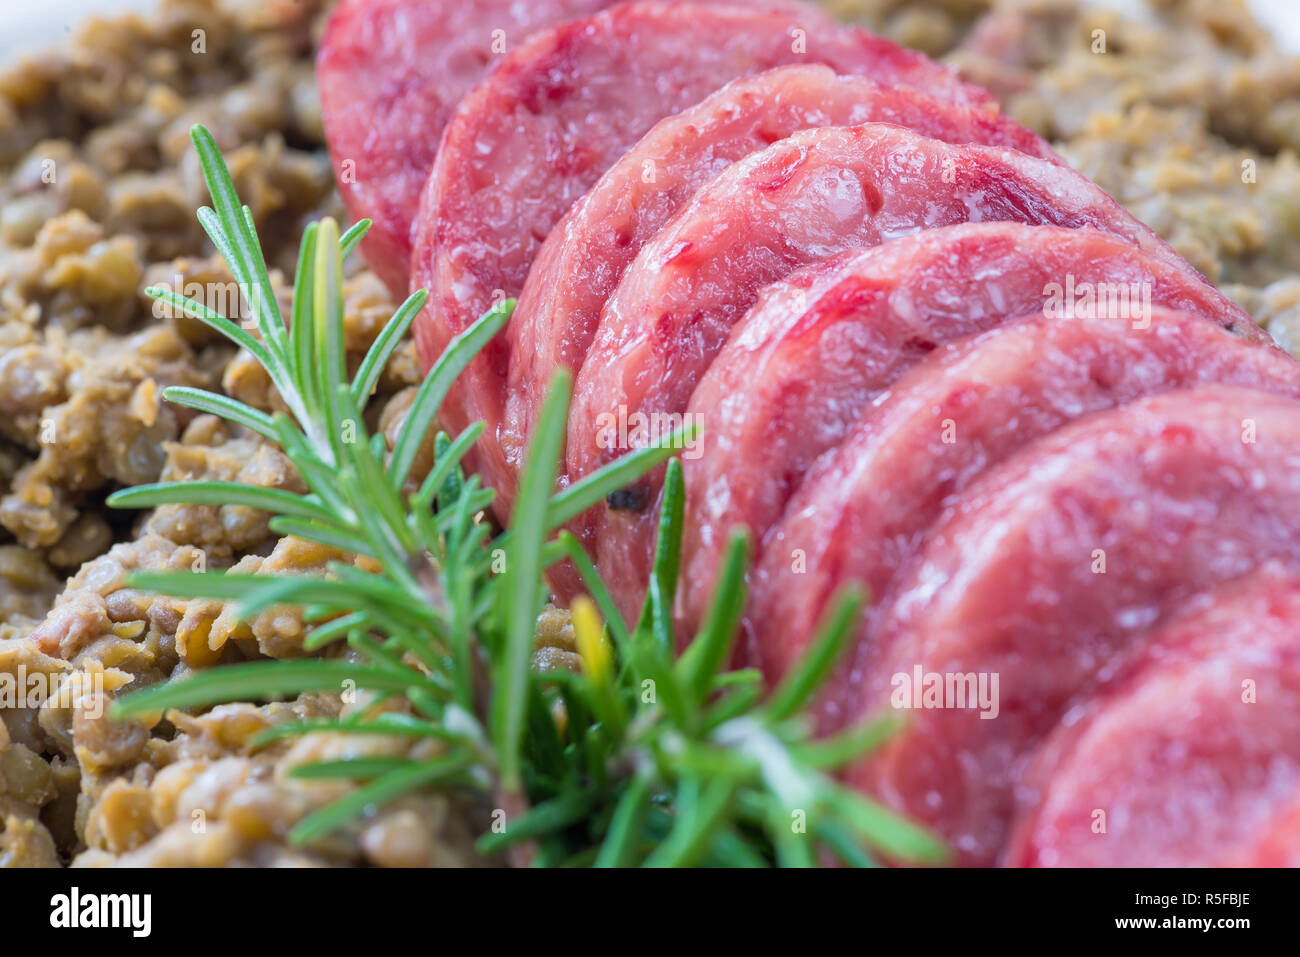 Cotechino (pork sausage) with lentils. Traditional Italian food Stock Photo